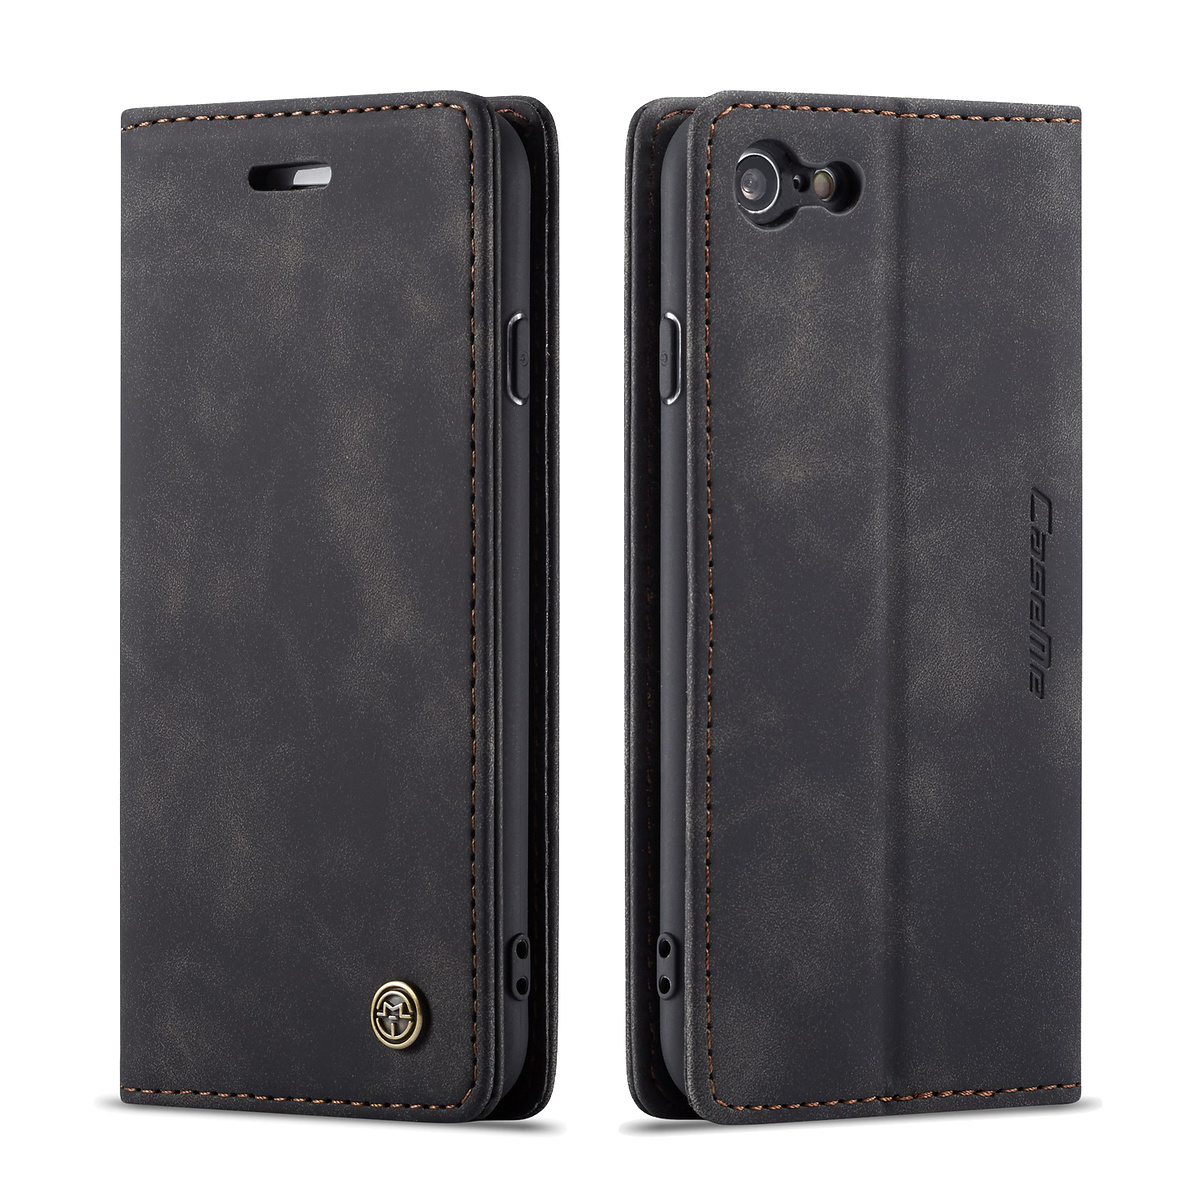 CaseMe plånboksfodral, iPhone 6/6S, svart